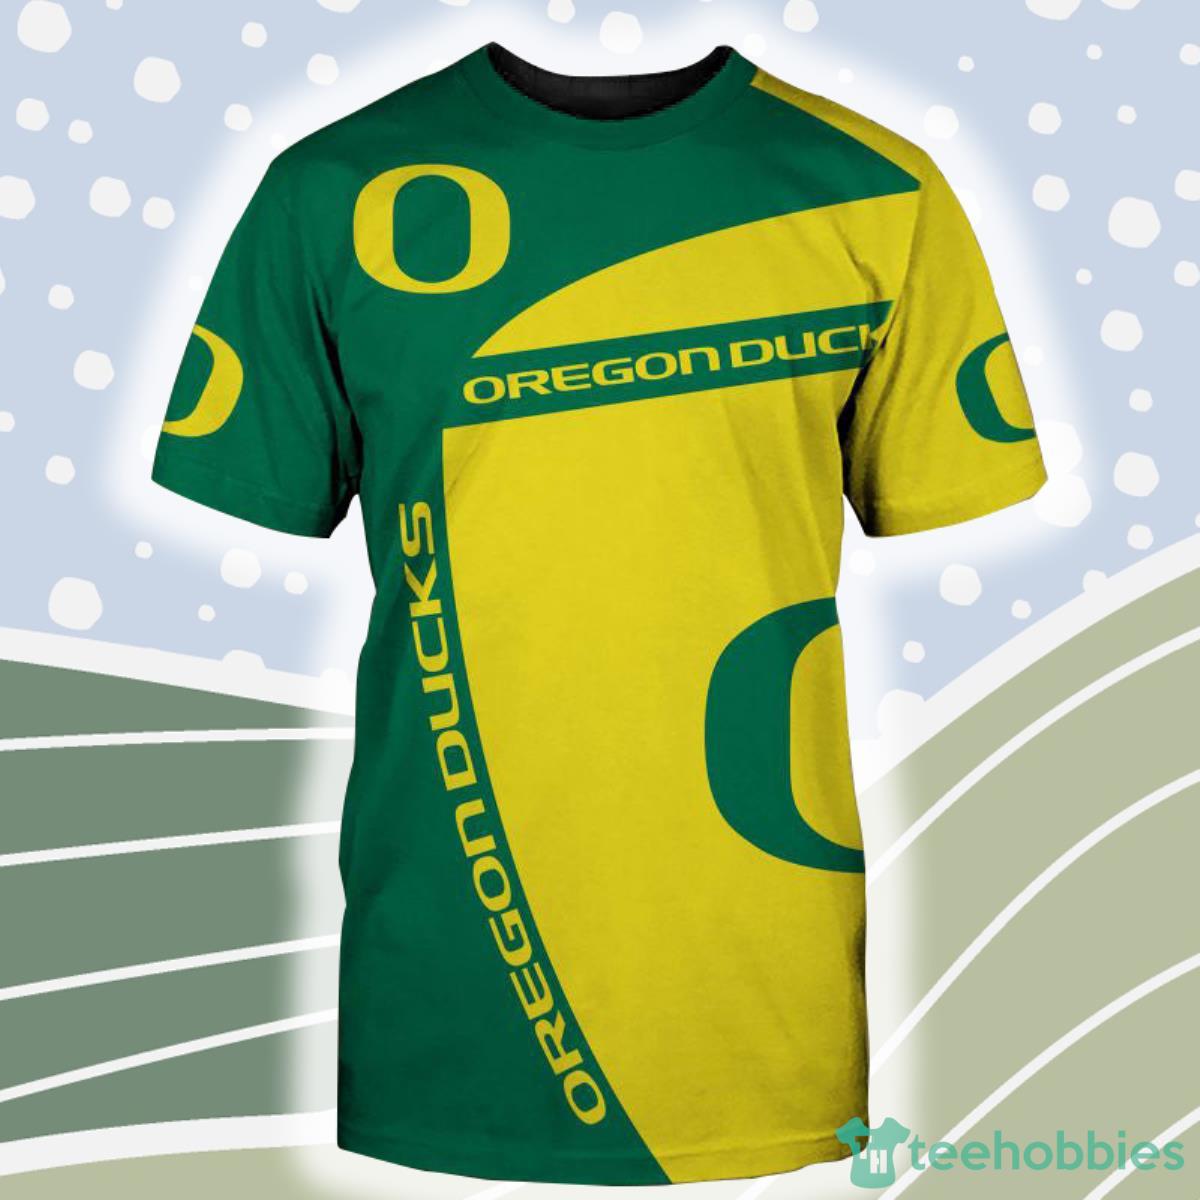 Oregon Ducks NCAA Shirt 3D For Fans Product Photo 1